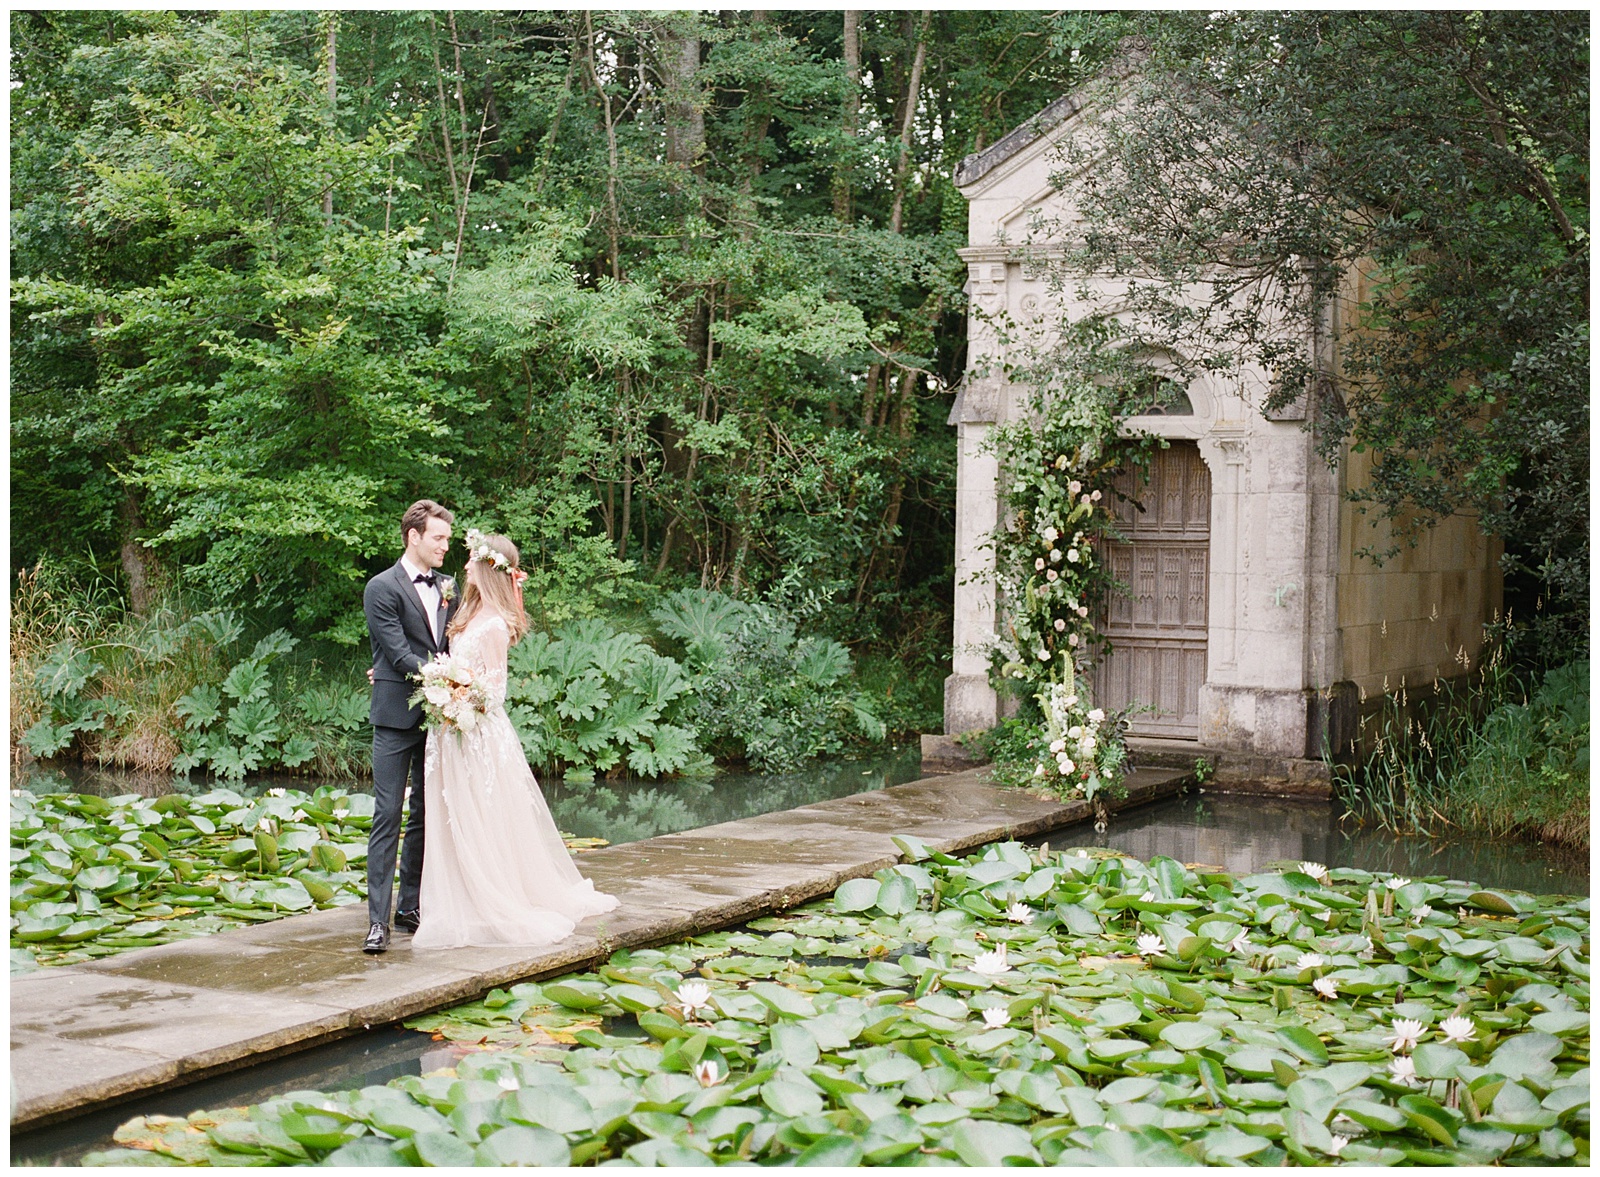 Ireland Destination Wedding Photography | Cliff at Lyons Weddings | Sarah Sunstrom Photography